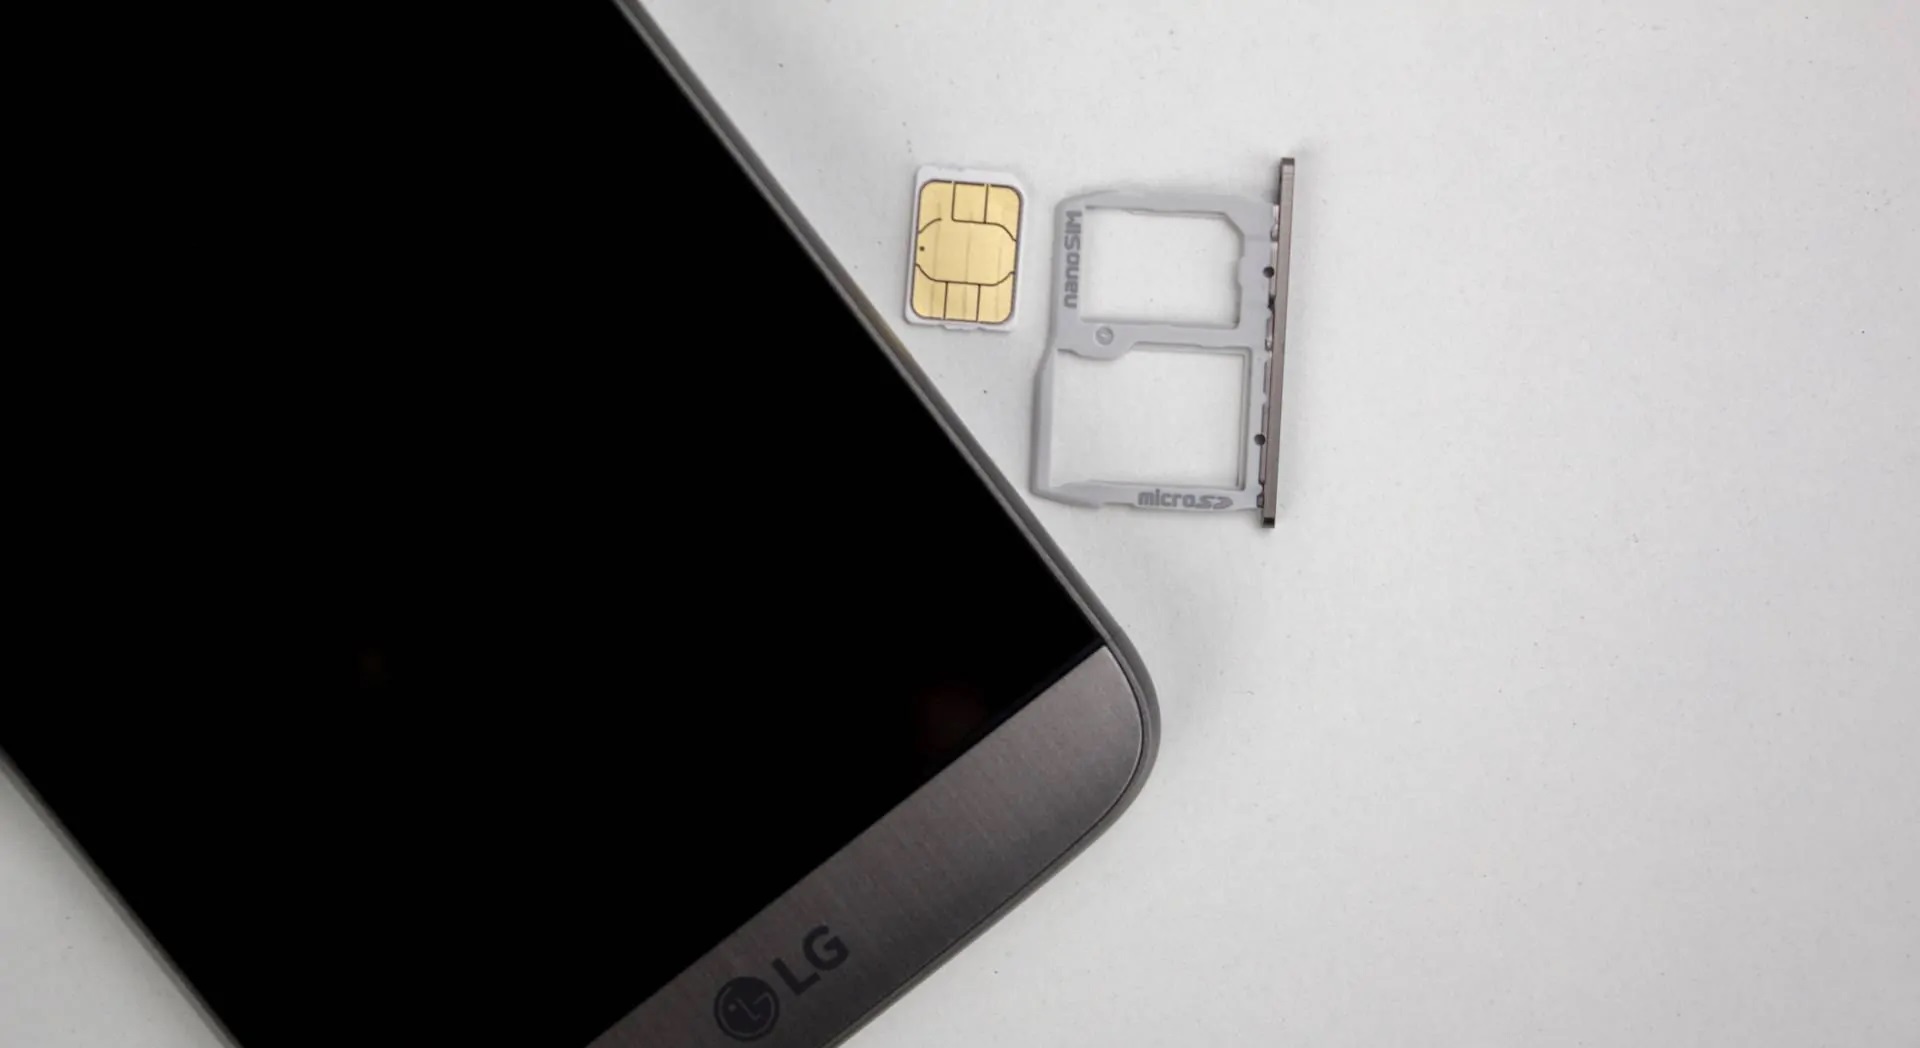 Identifying The SIM Card Slot On LG G5